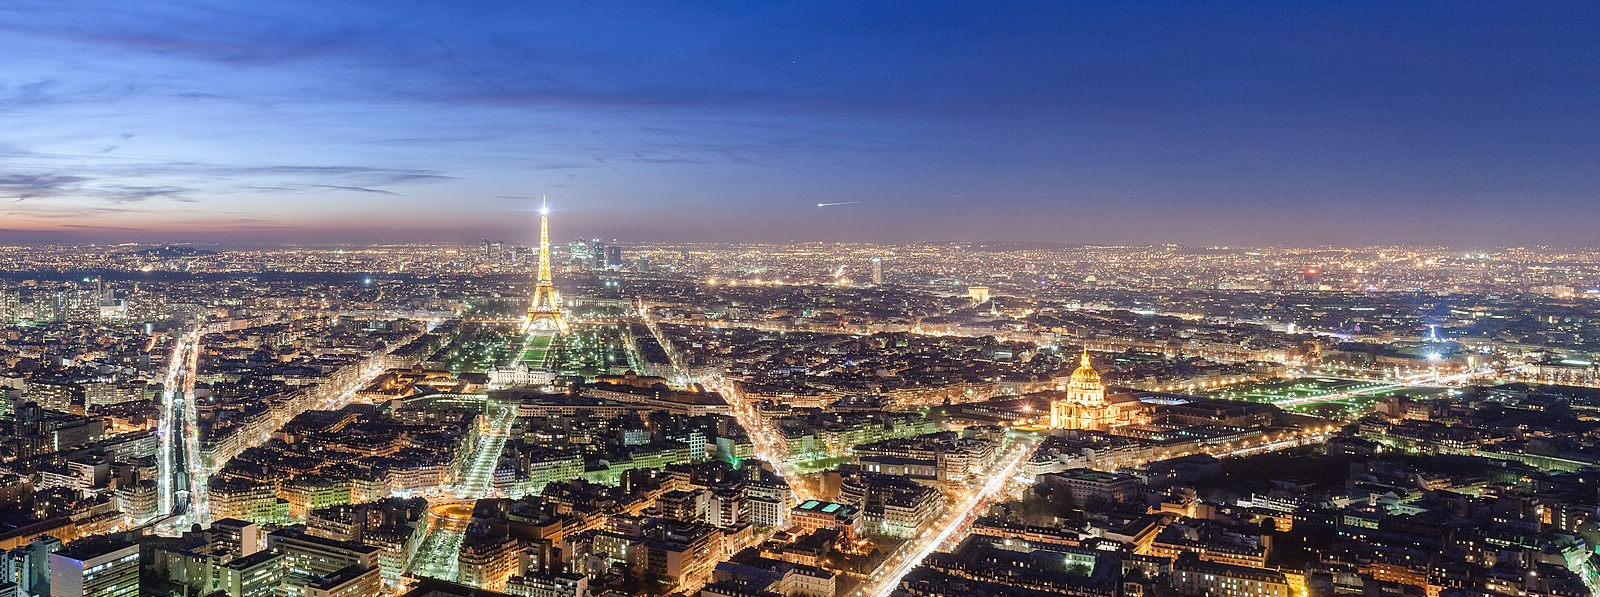 Aereal view of Paris at night